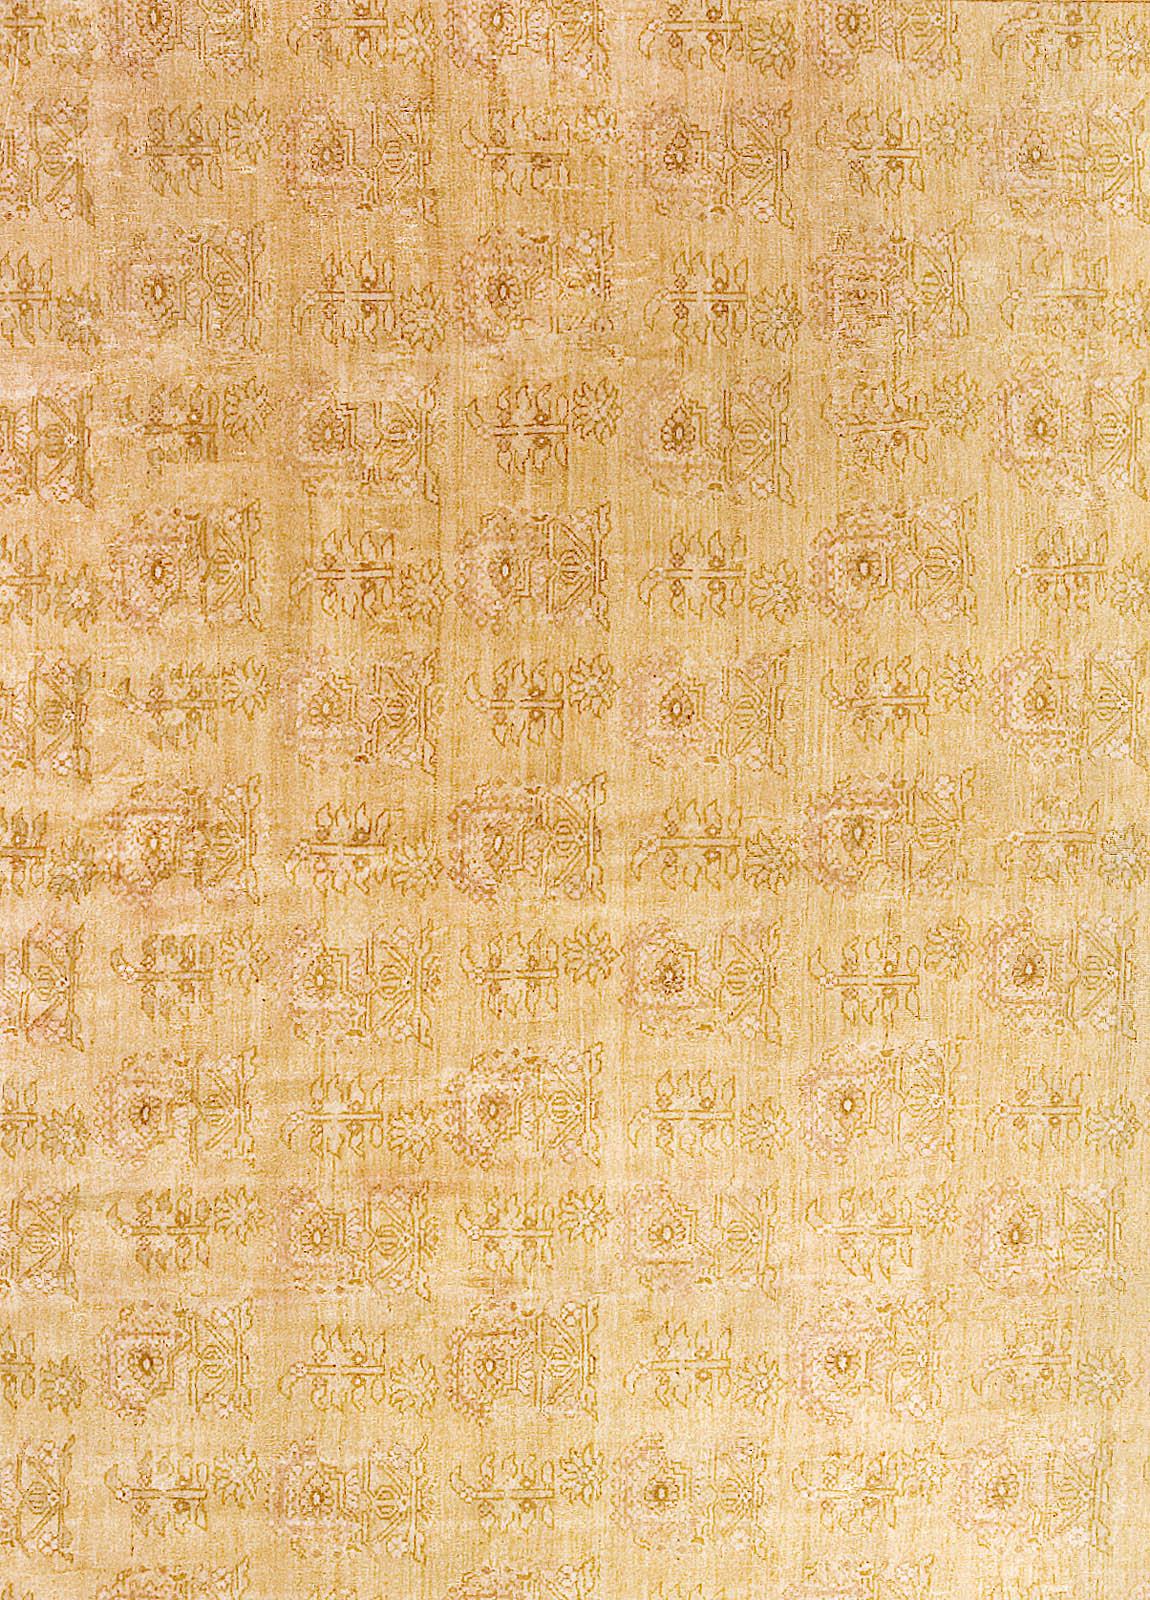 Antique washed Indian Amritsar handmade wool rug
Size: 12'1